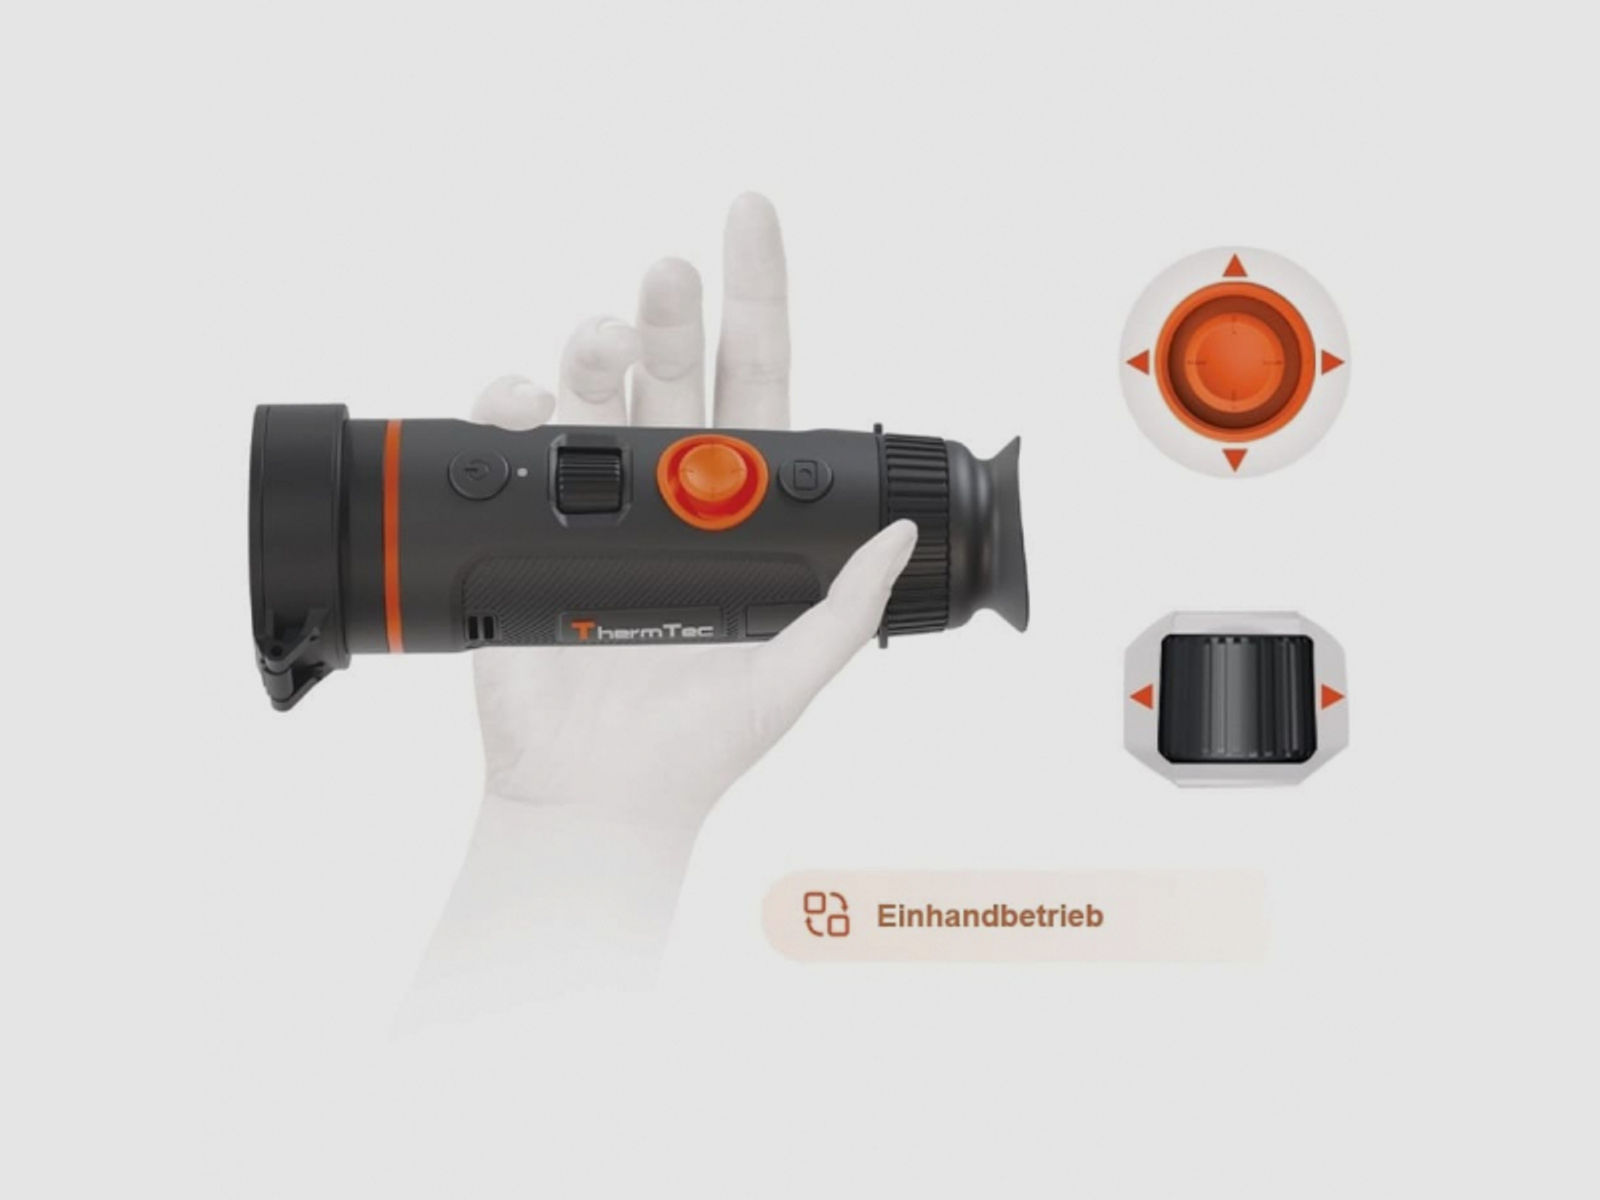 ThermTec WILD 650 Wärmebildkamera | 640x512 Sensor | Fingerfokussierung | NETD unter 18 mK